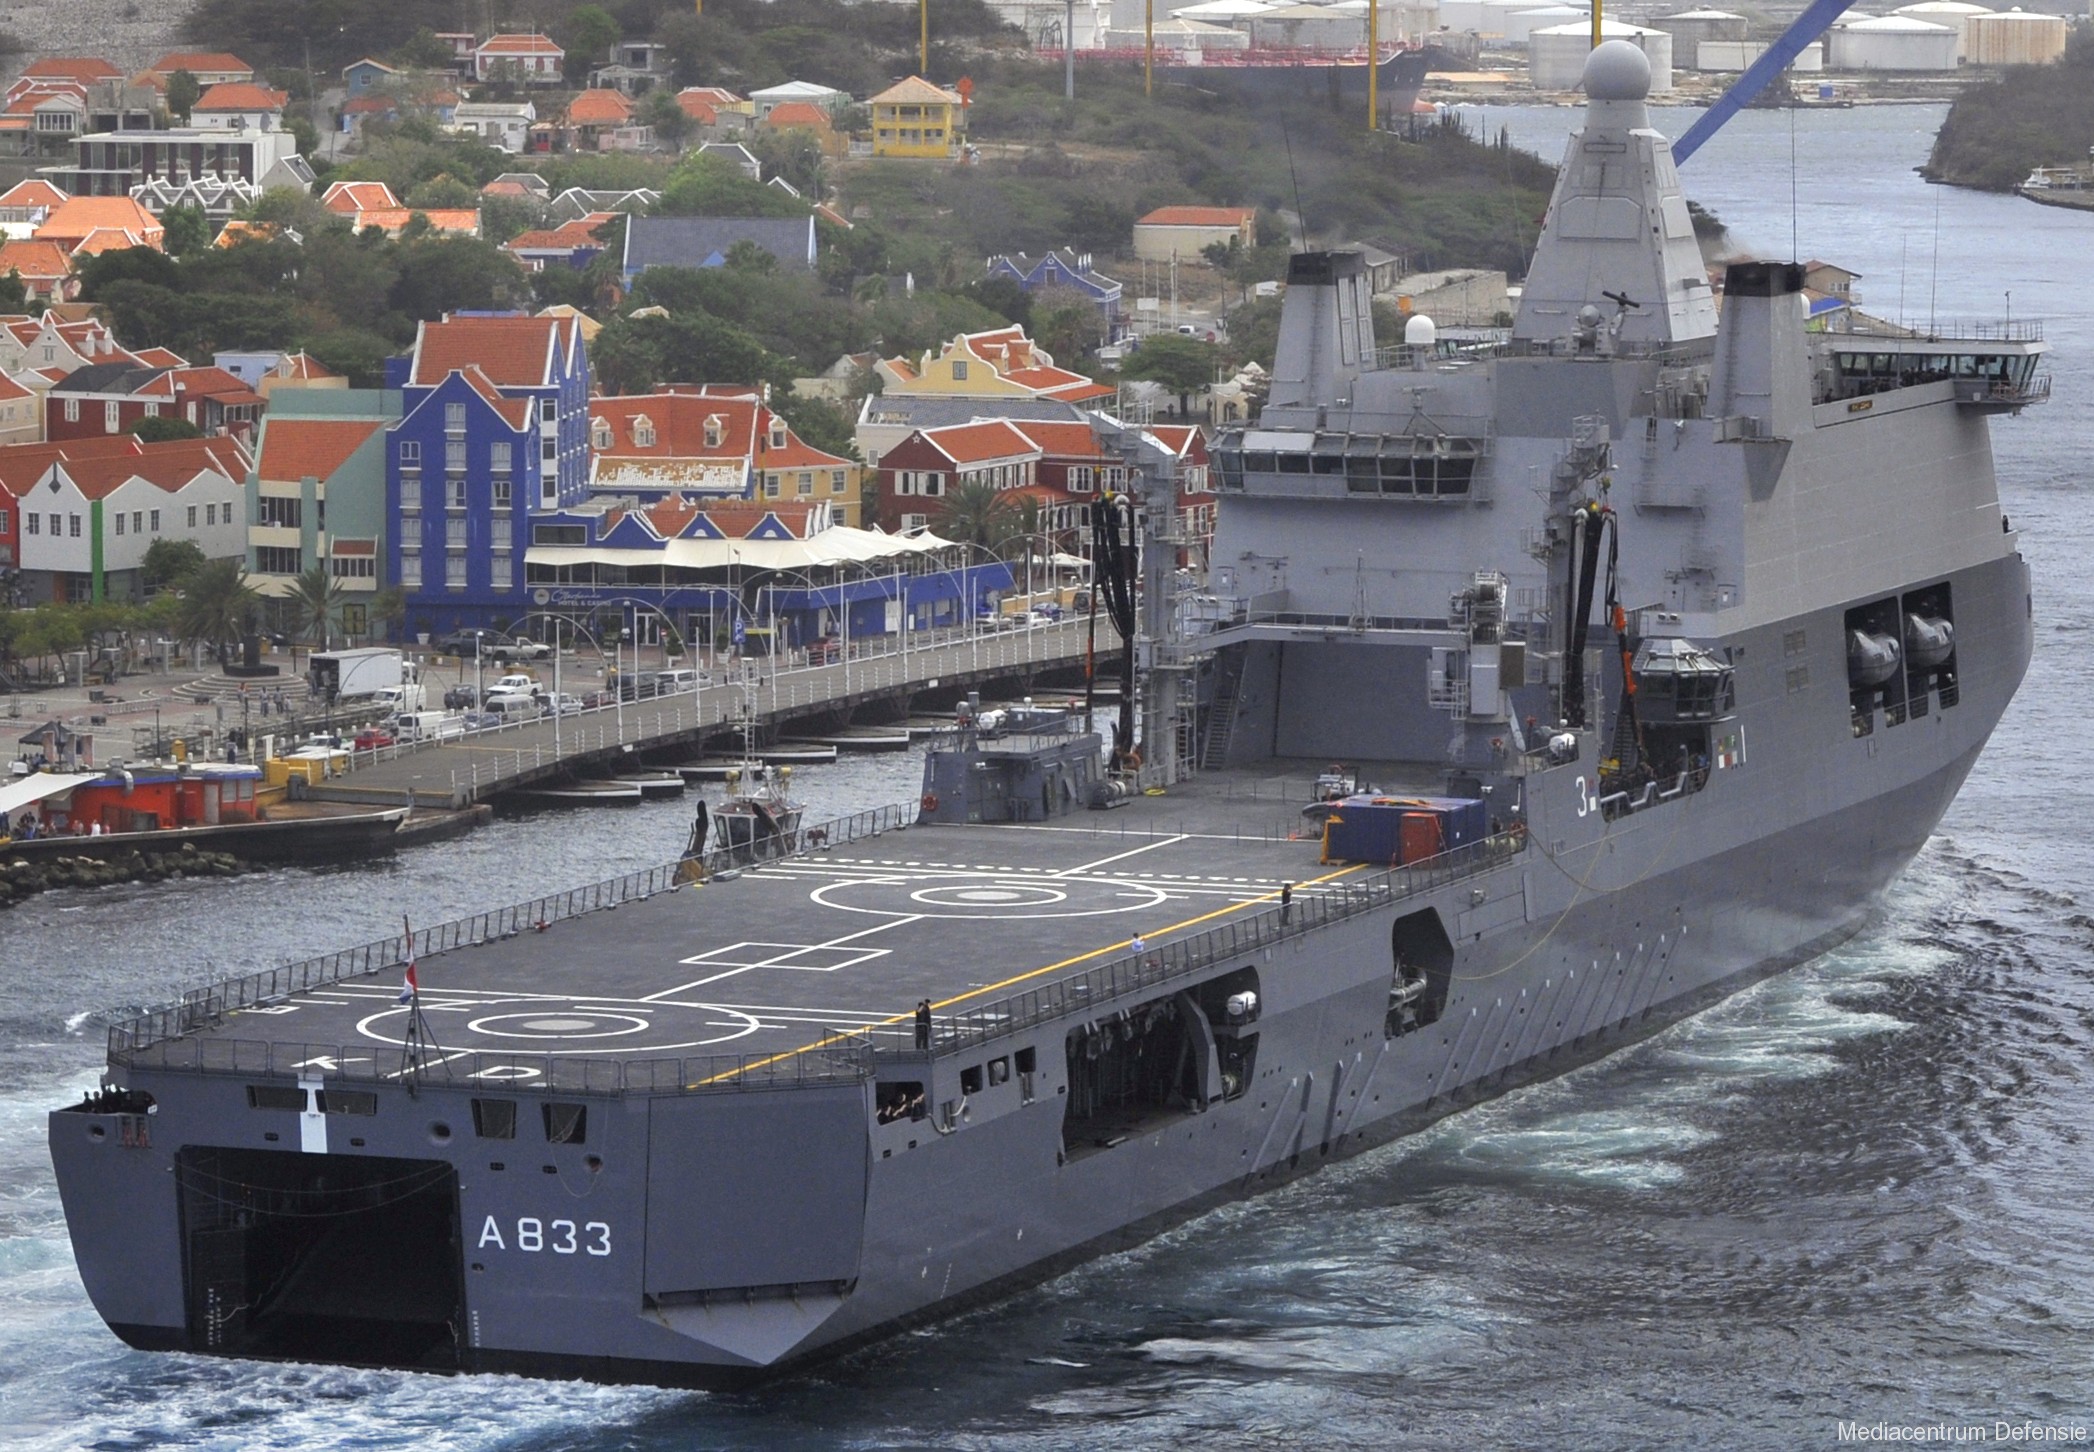 a-833 hnlms karel doorman joint support ship royal netherlands navy koninklijke marine 24